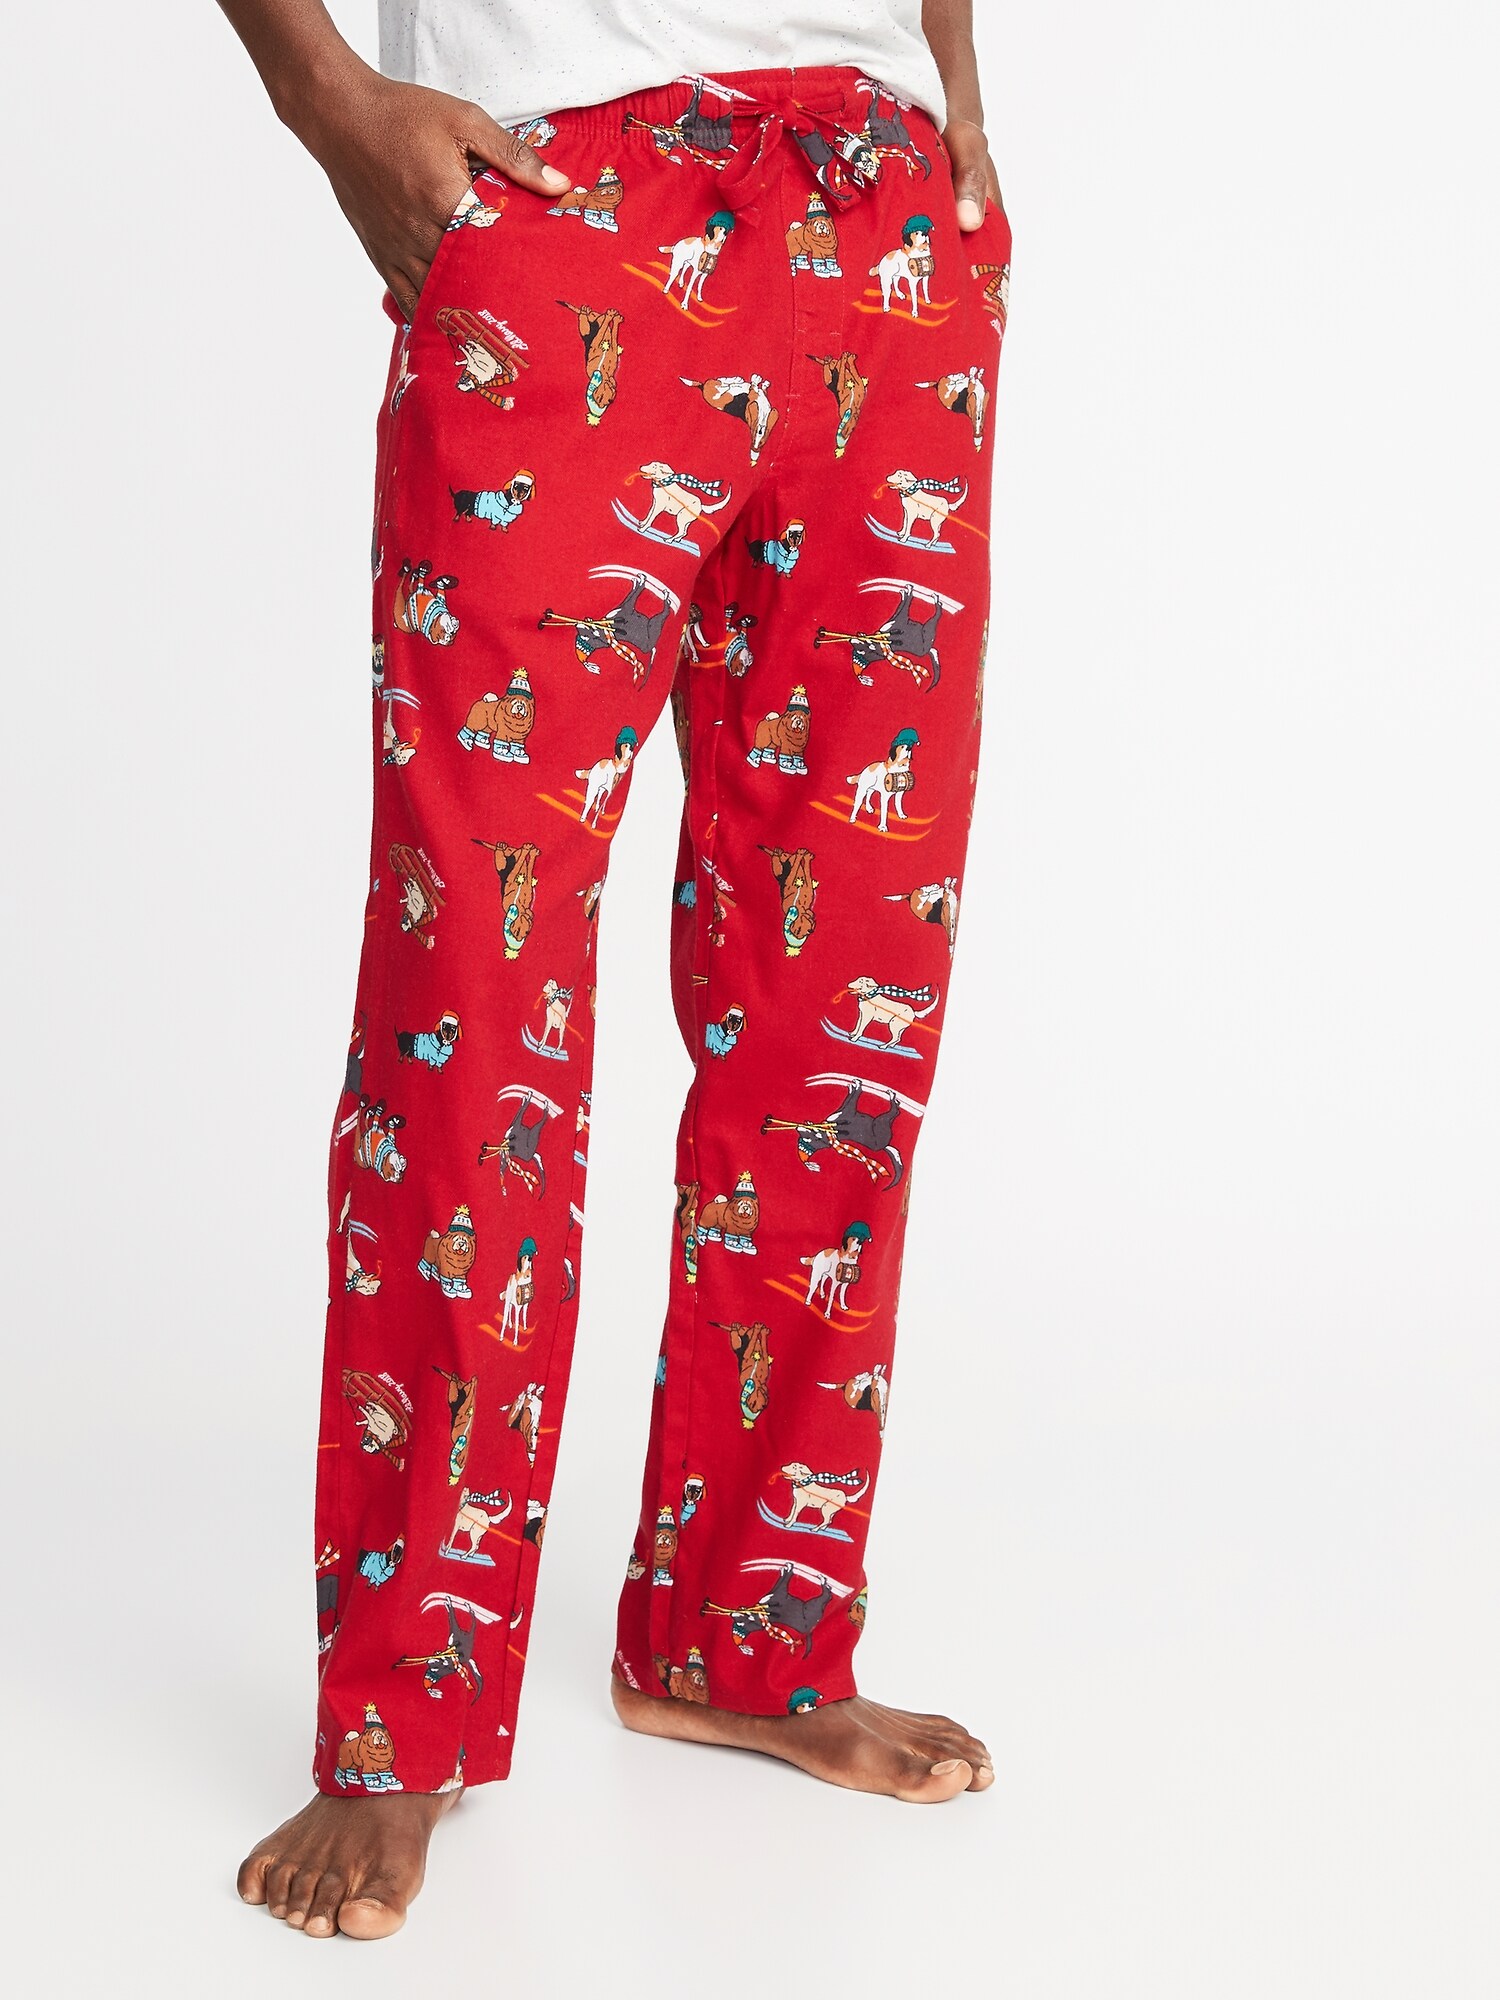 Adr Men's Cotton Flannel Pajama Pants, Winter Joggers Red Buffalo